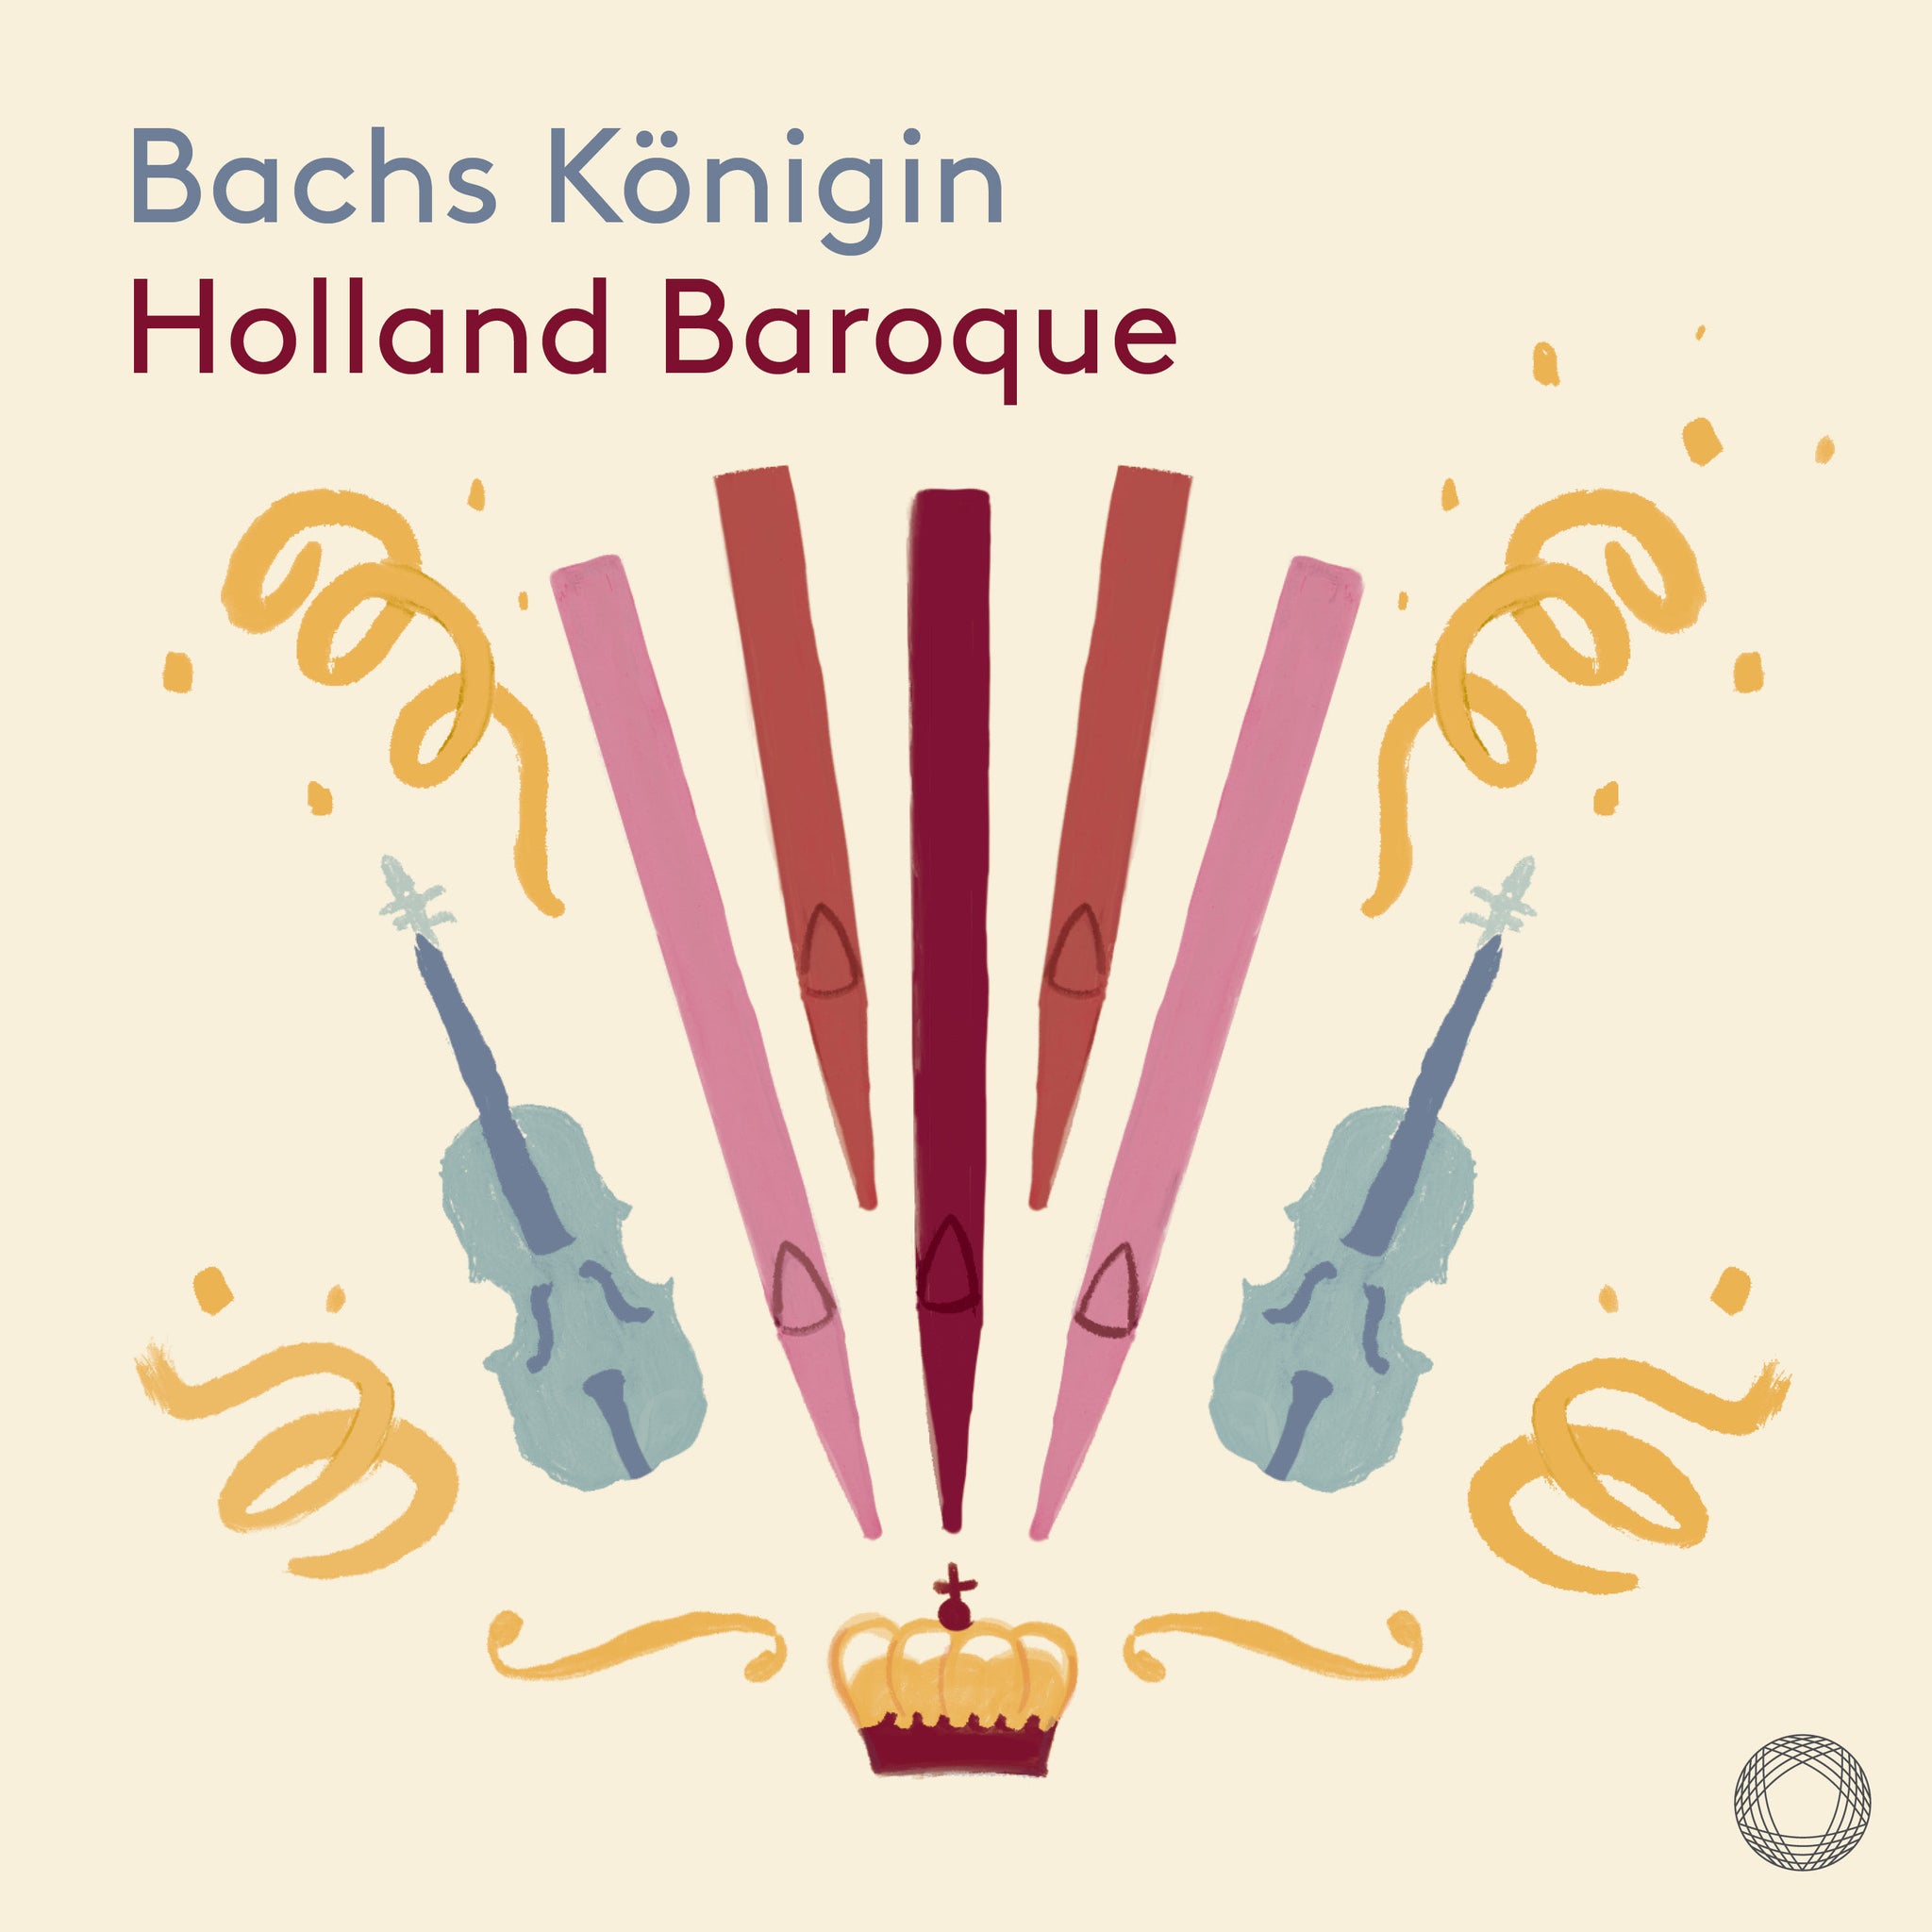 Bachs Königin - Organ Works of J.S. Bach / Holland Baroque